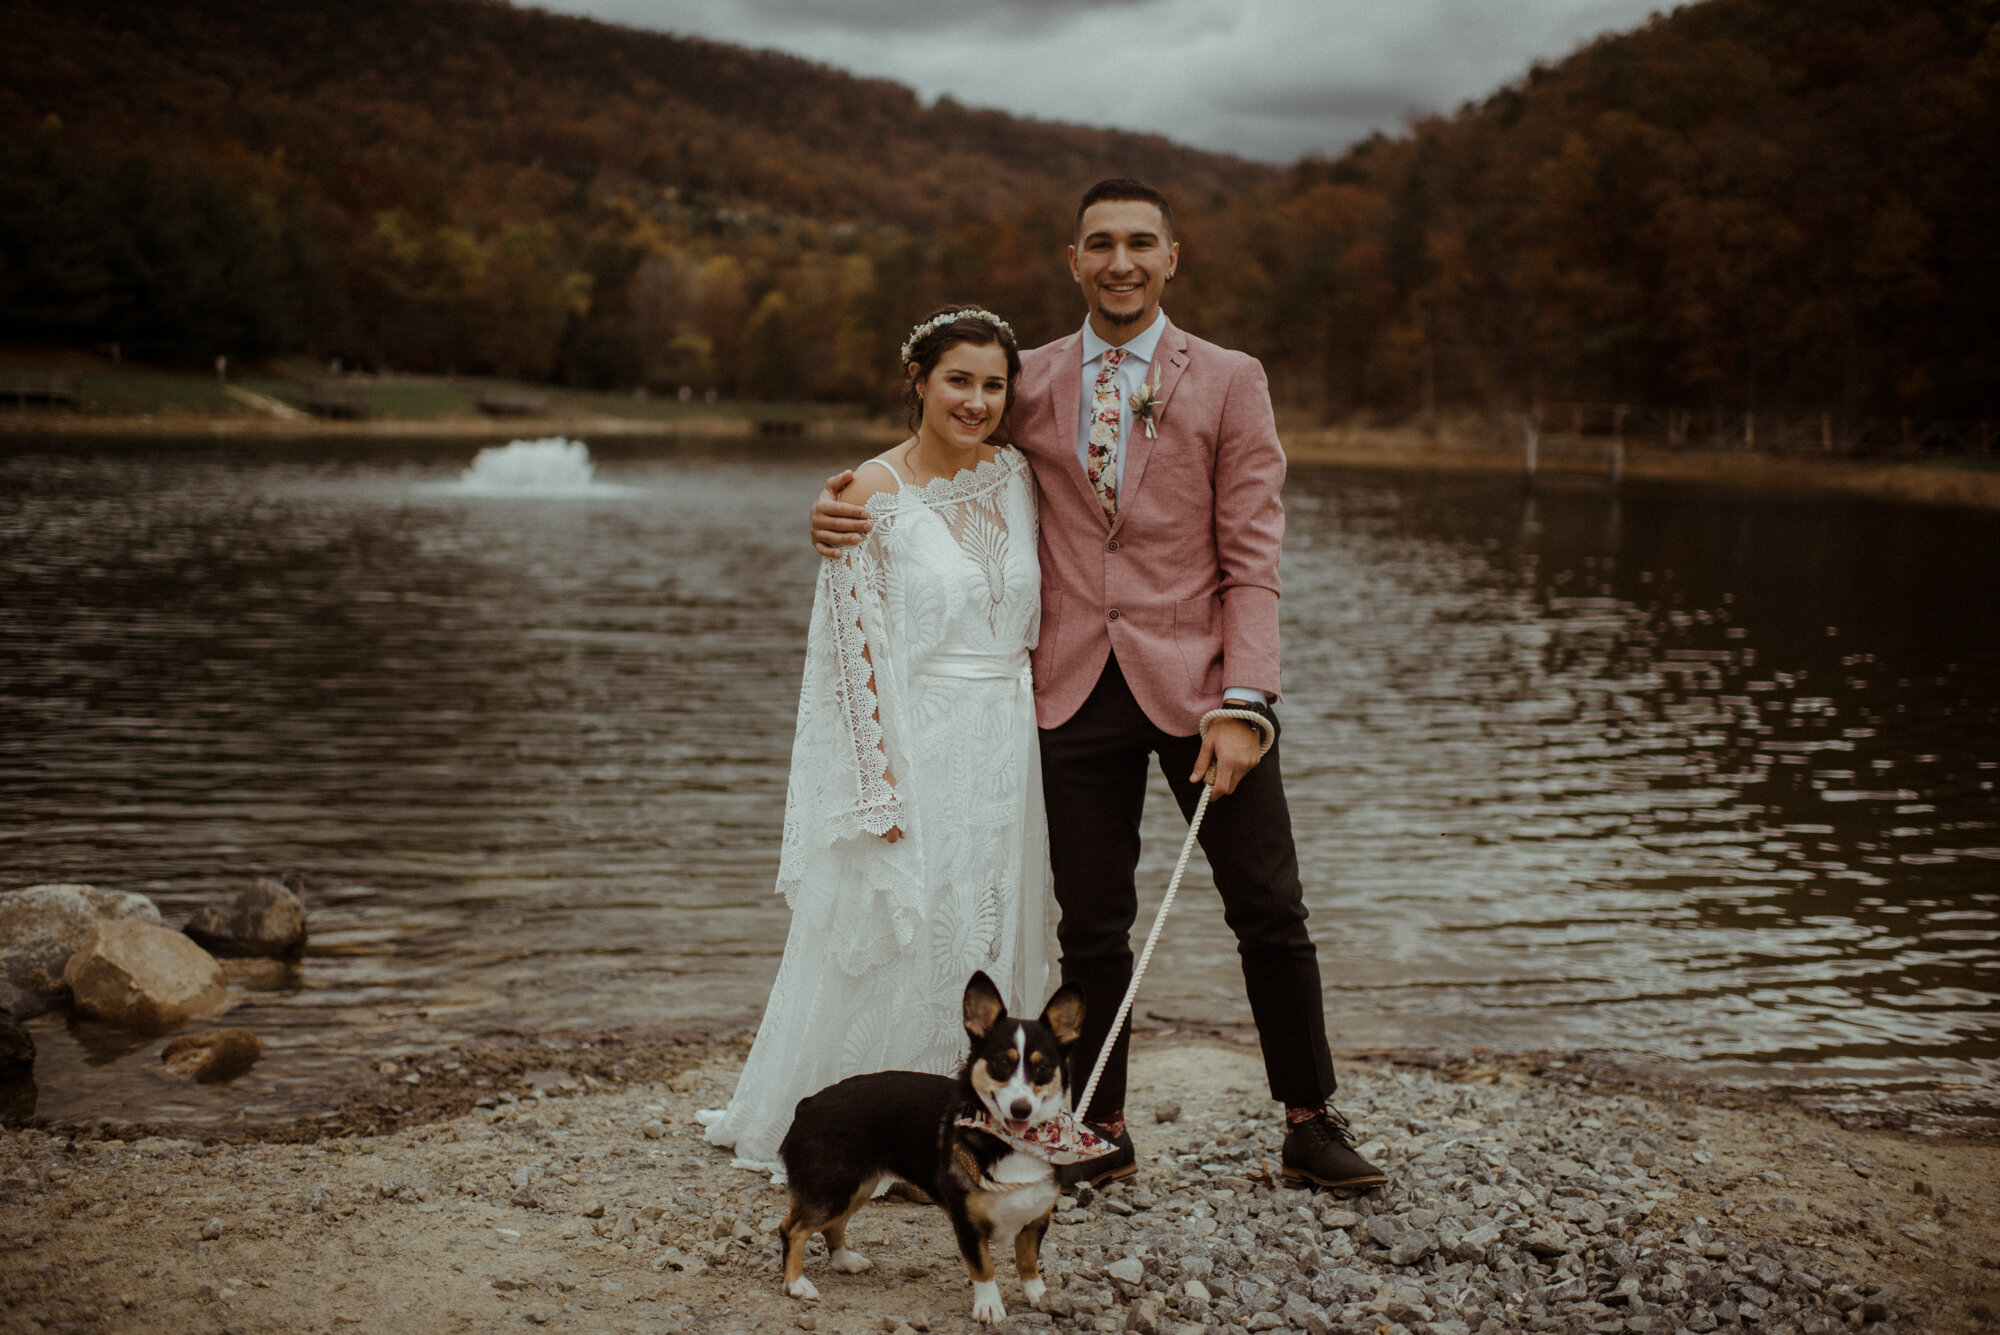 Antonia and Joey - Rainy Autumn Wedding - Small Virginia Wedding - White Sails Creative Photography_20.jpg